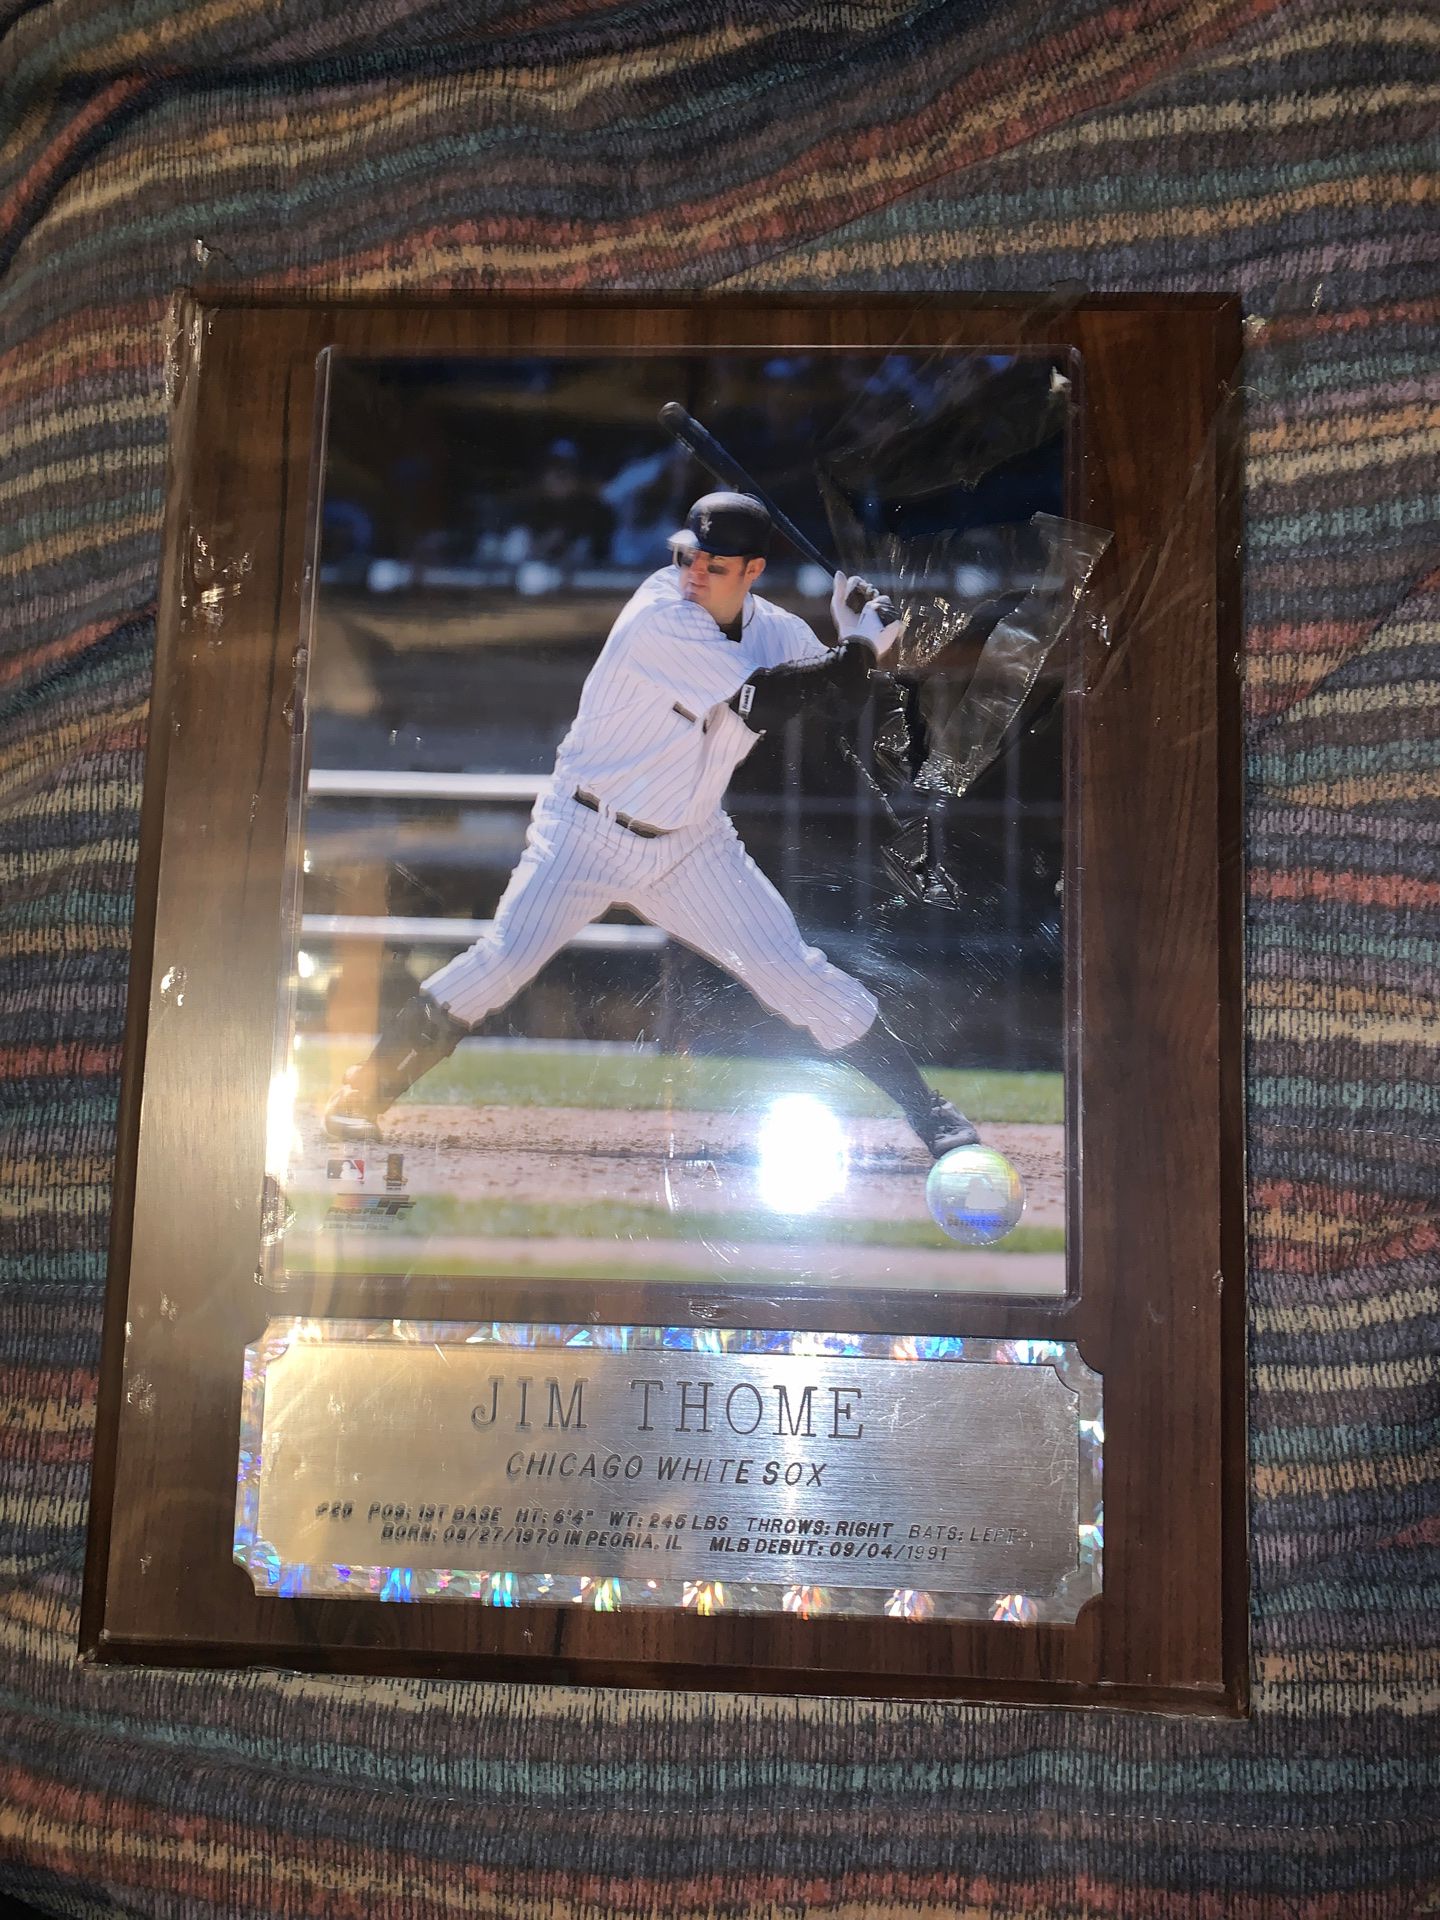 Jim Thome Chicago white Sox baseball plaque